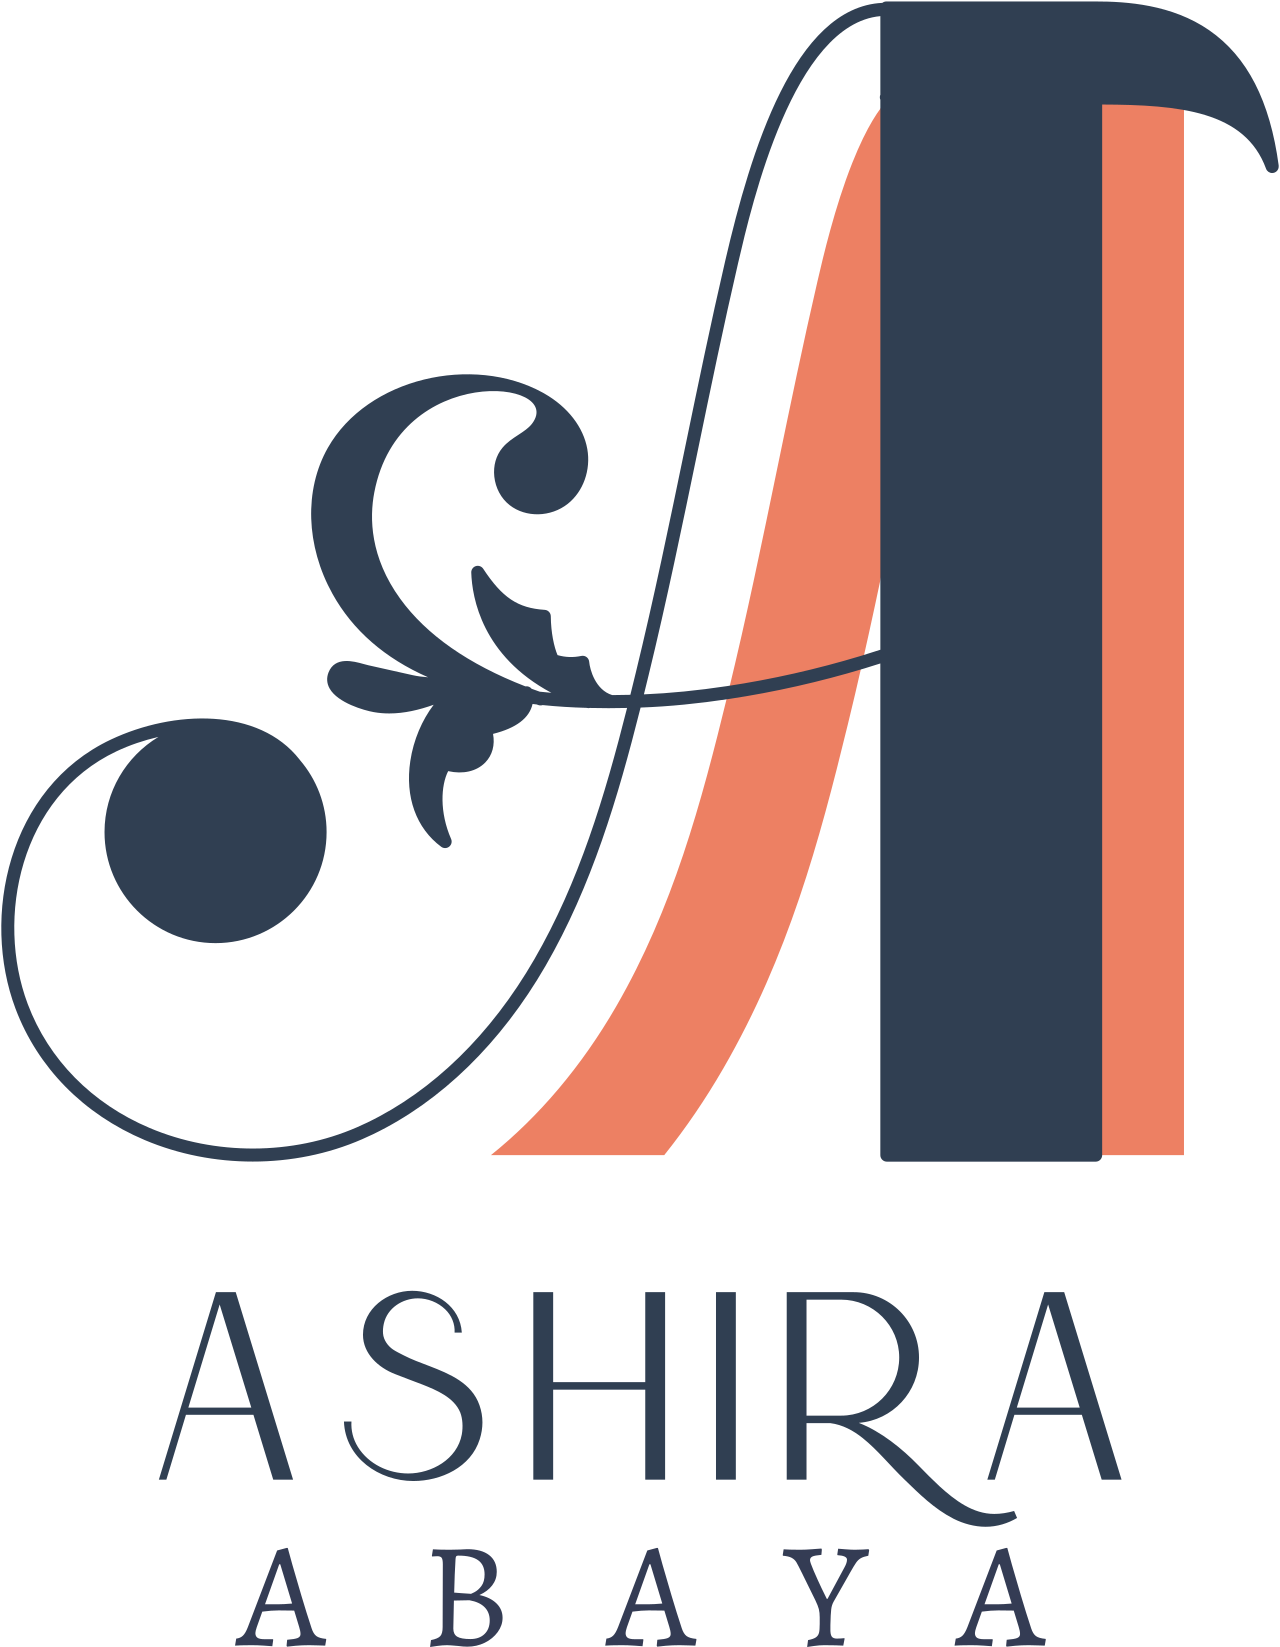 ASHIRA's web page